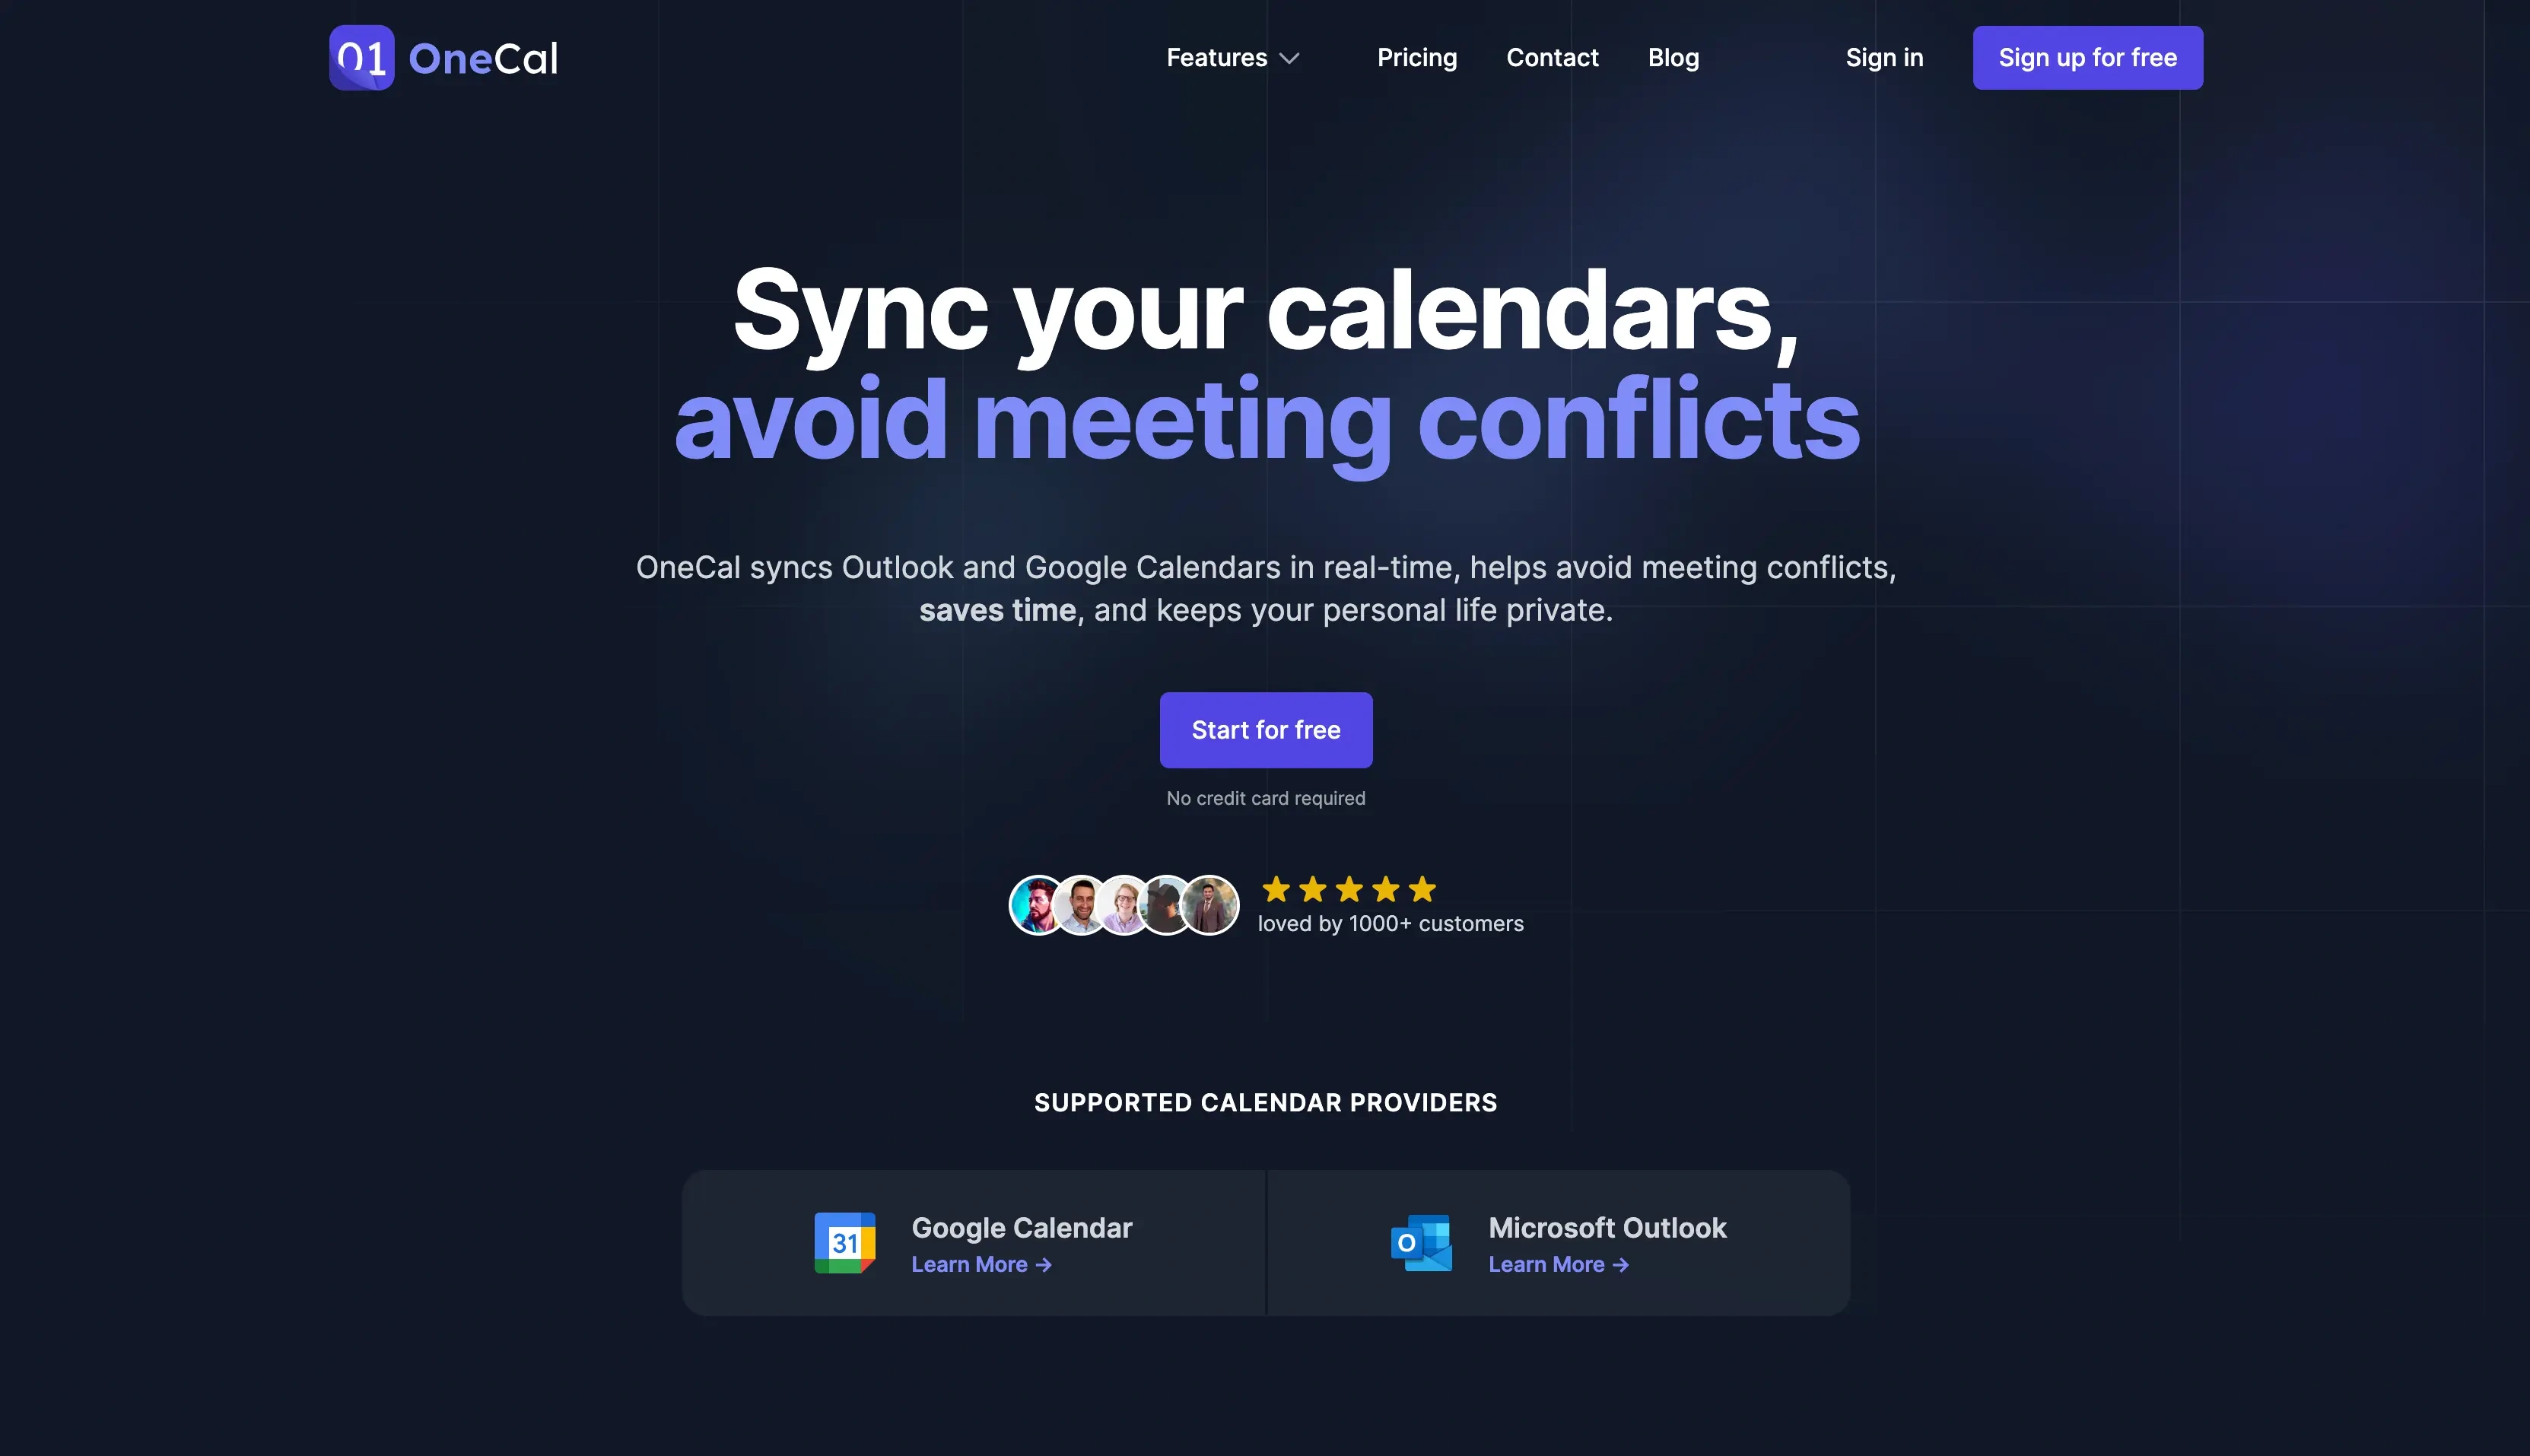 How To Sync Multiple Microsoft Teams Calendars